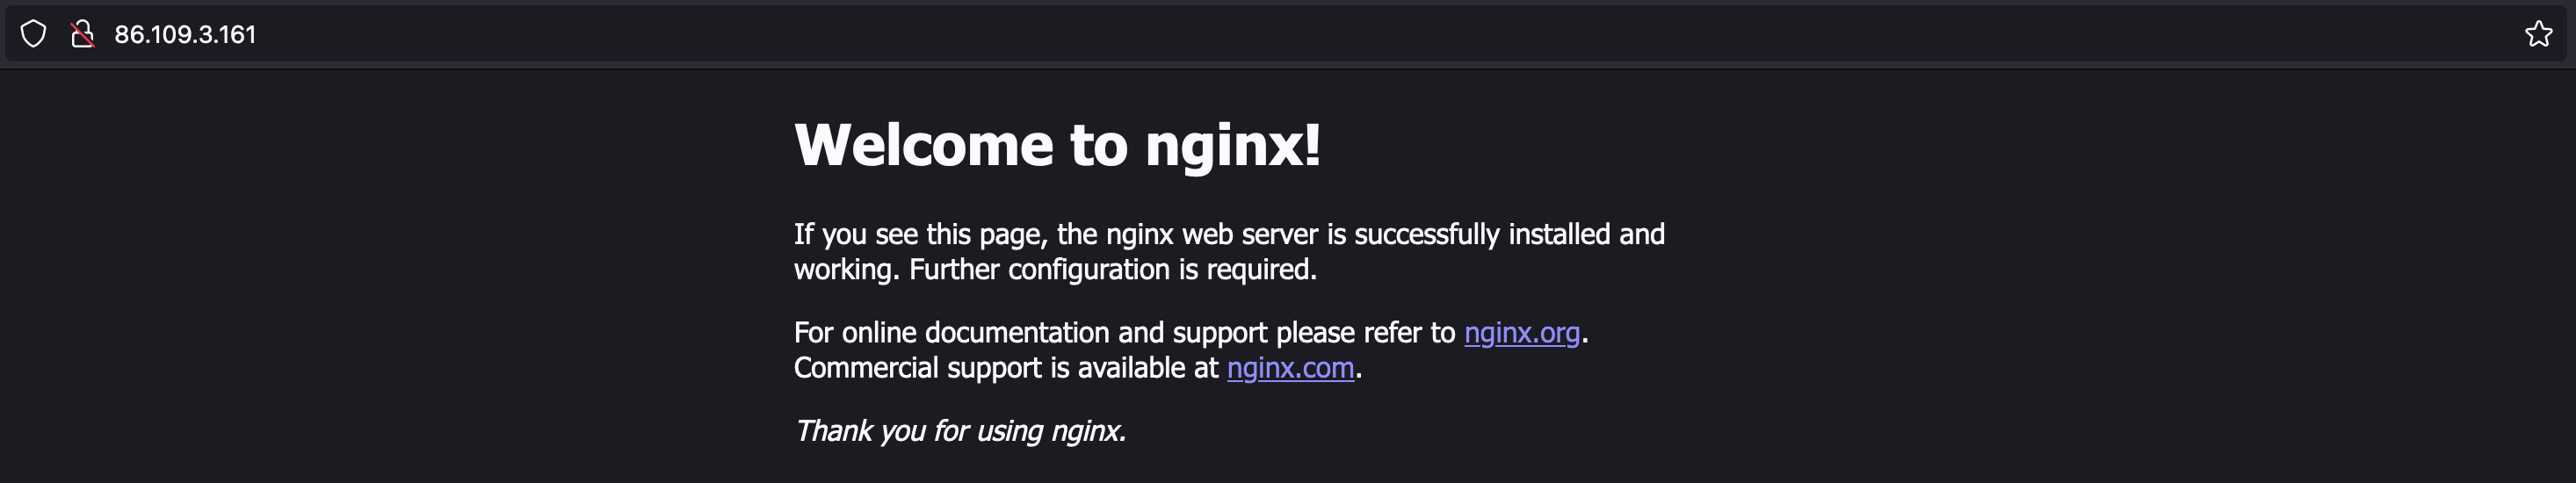 Swarm NGINX